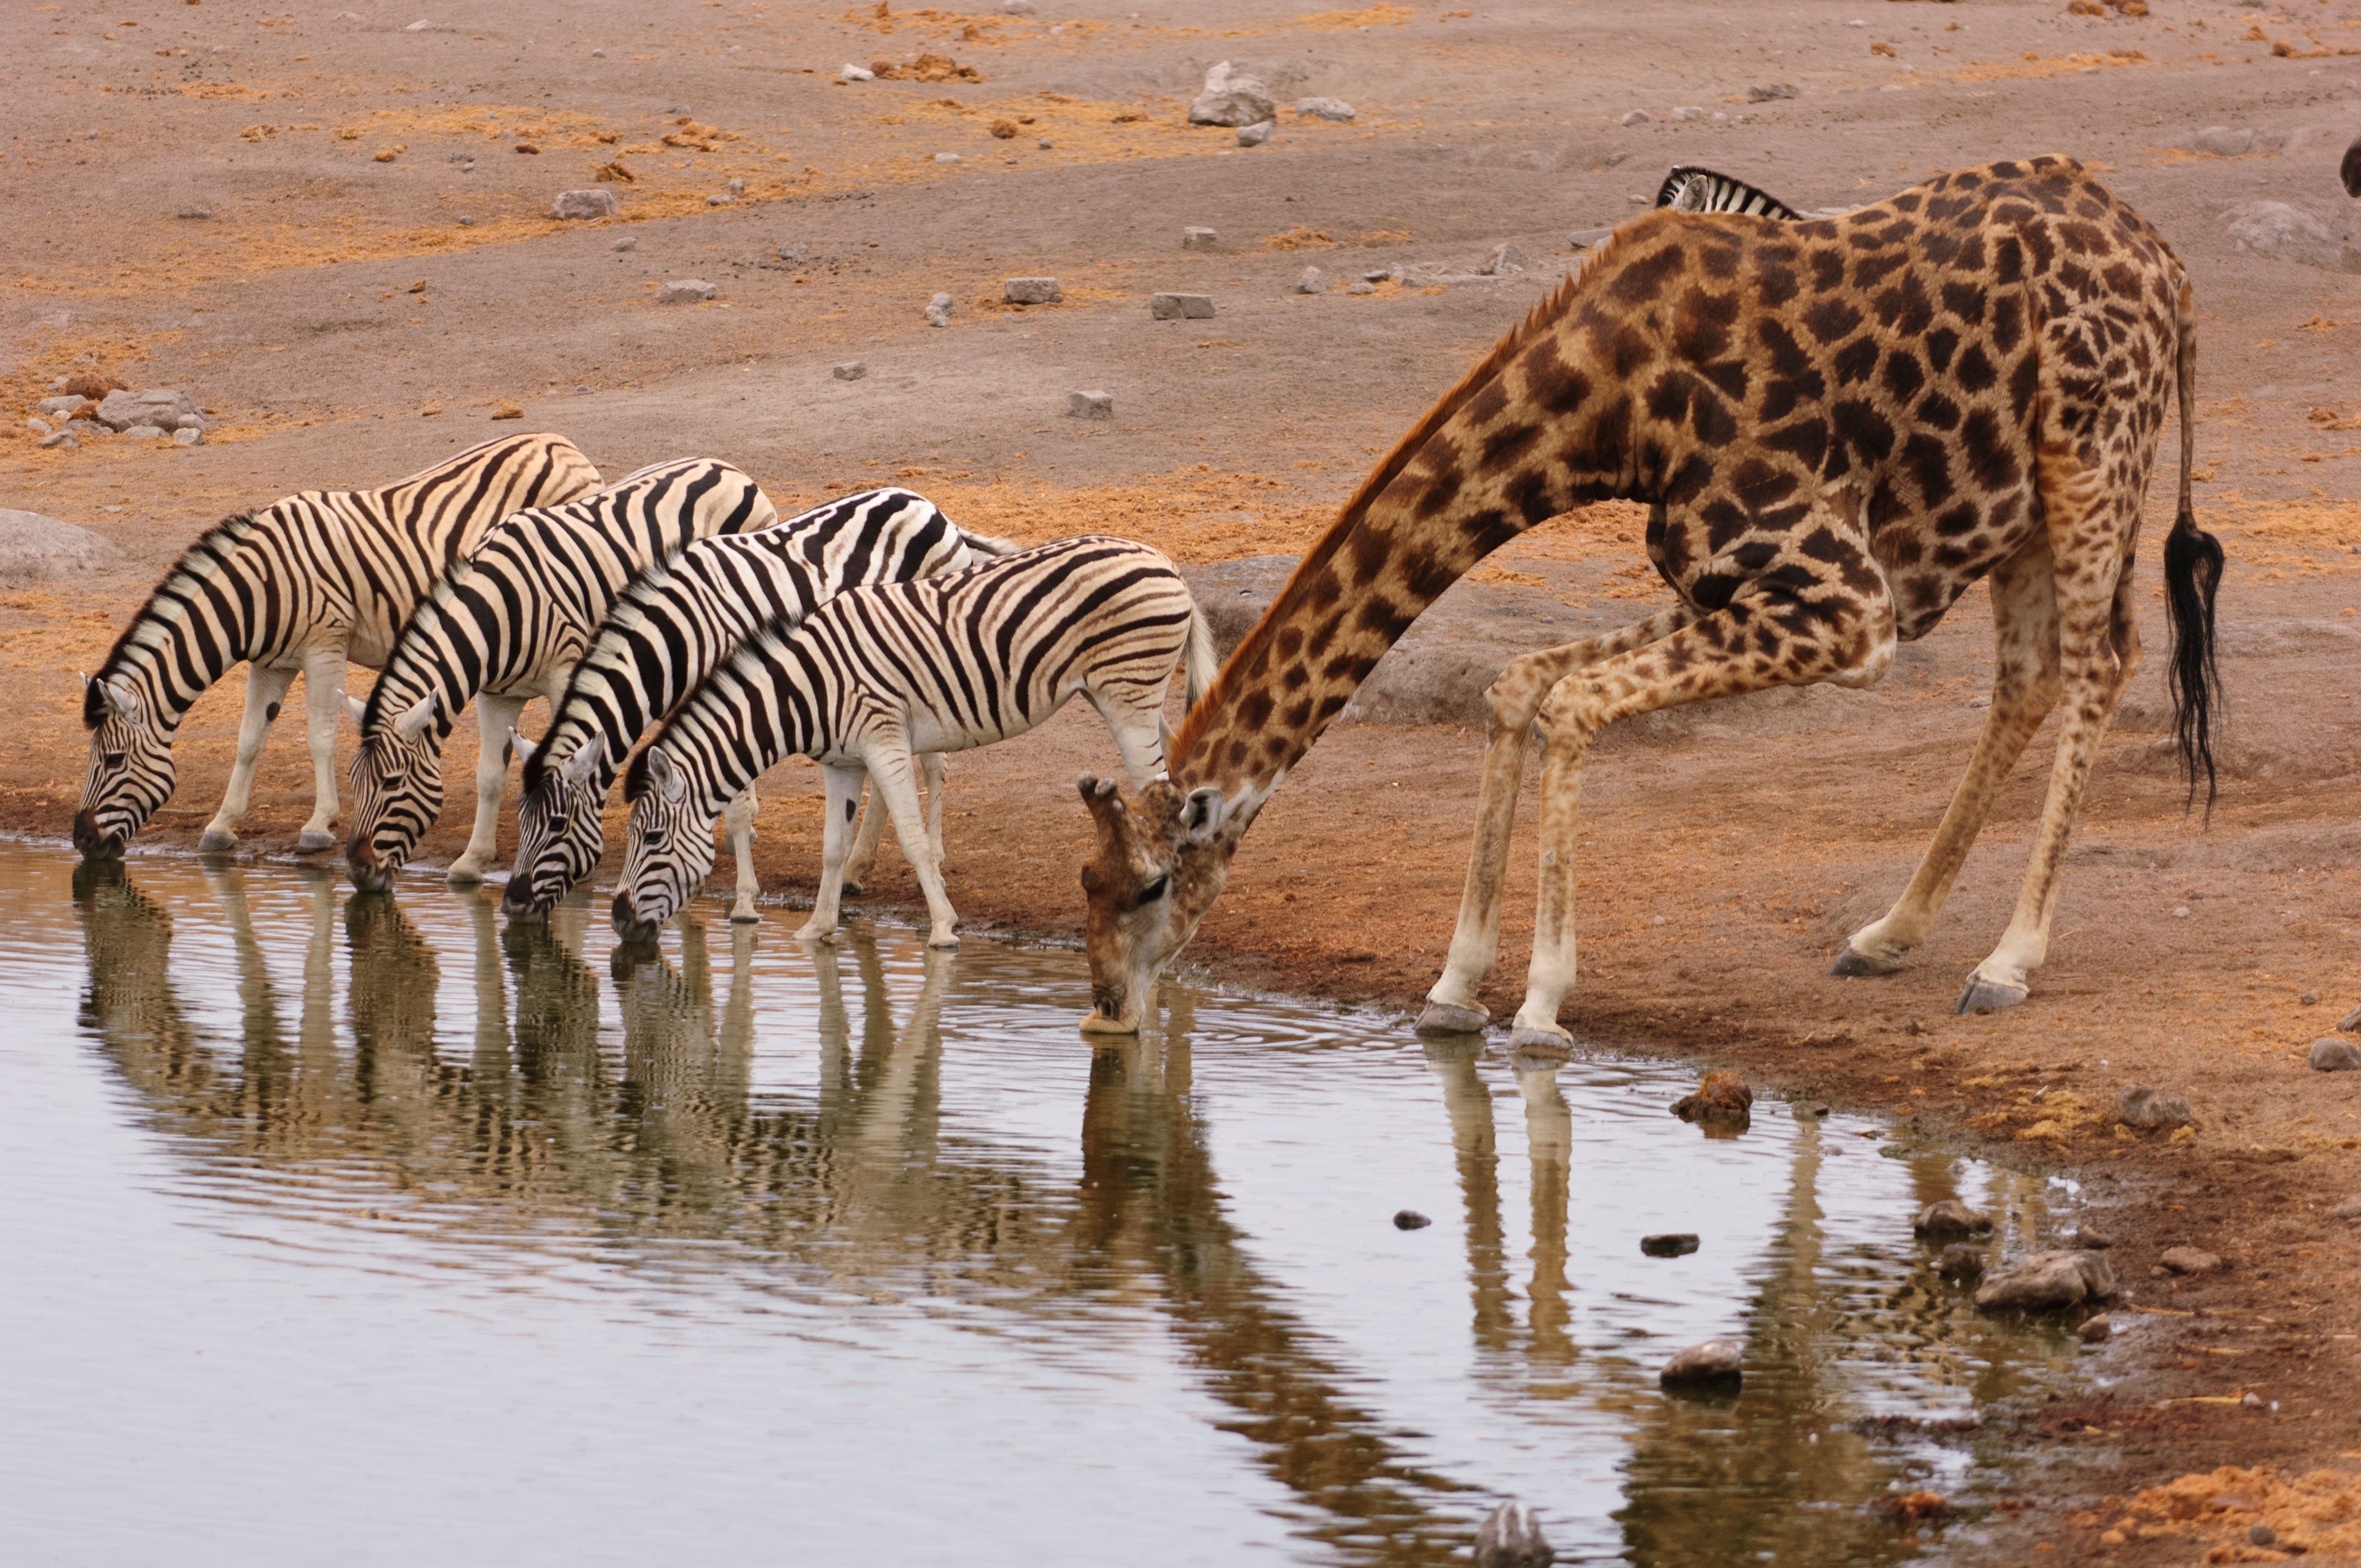 Giraffe drinking from watering hole